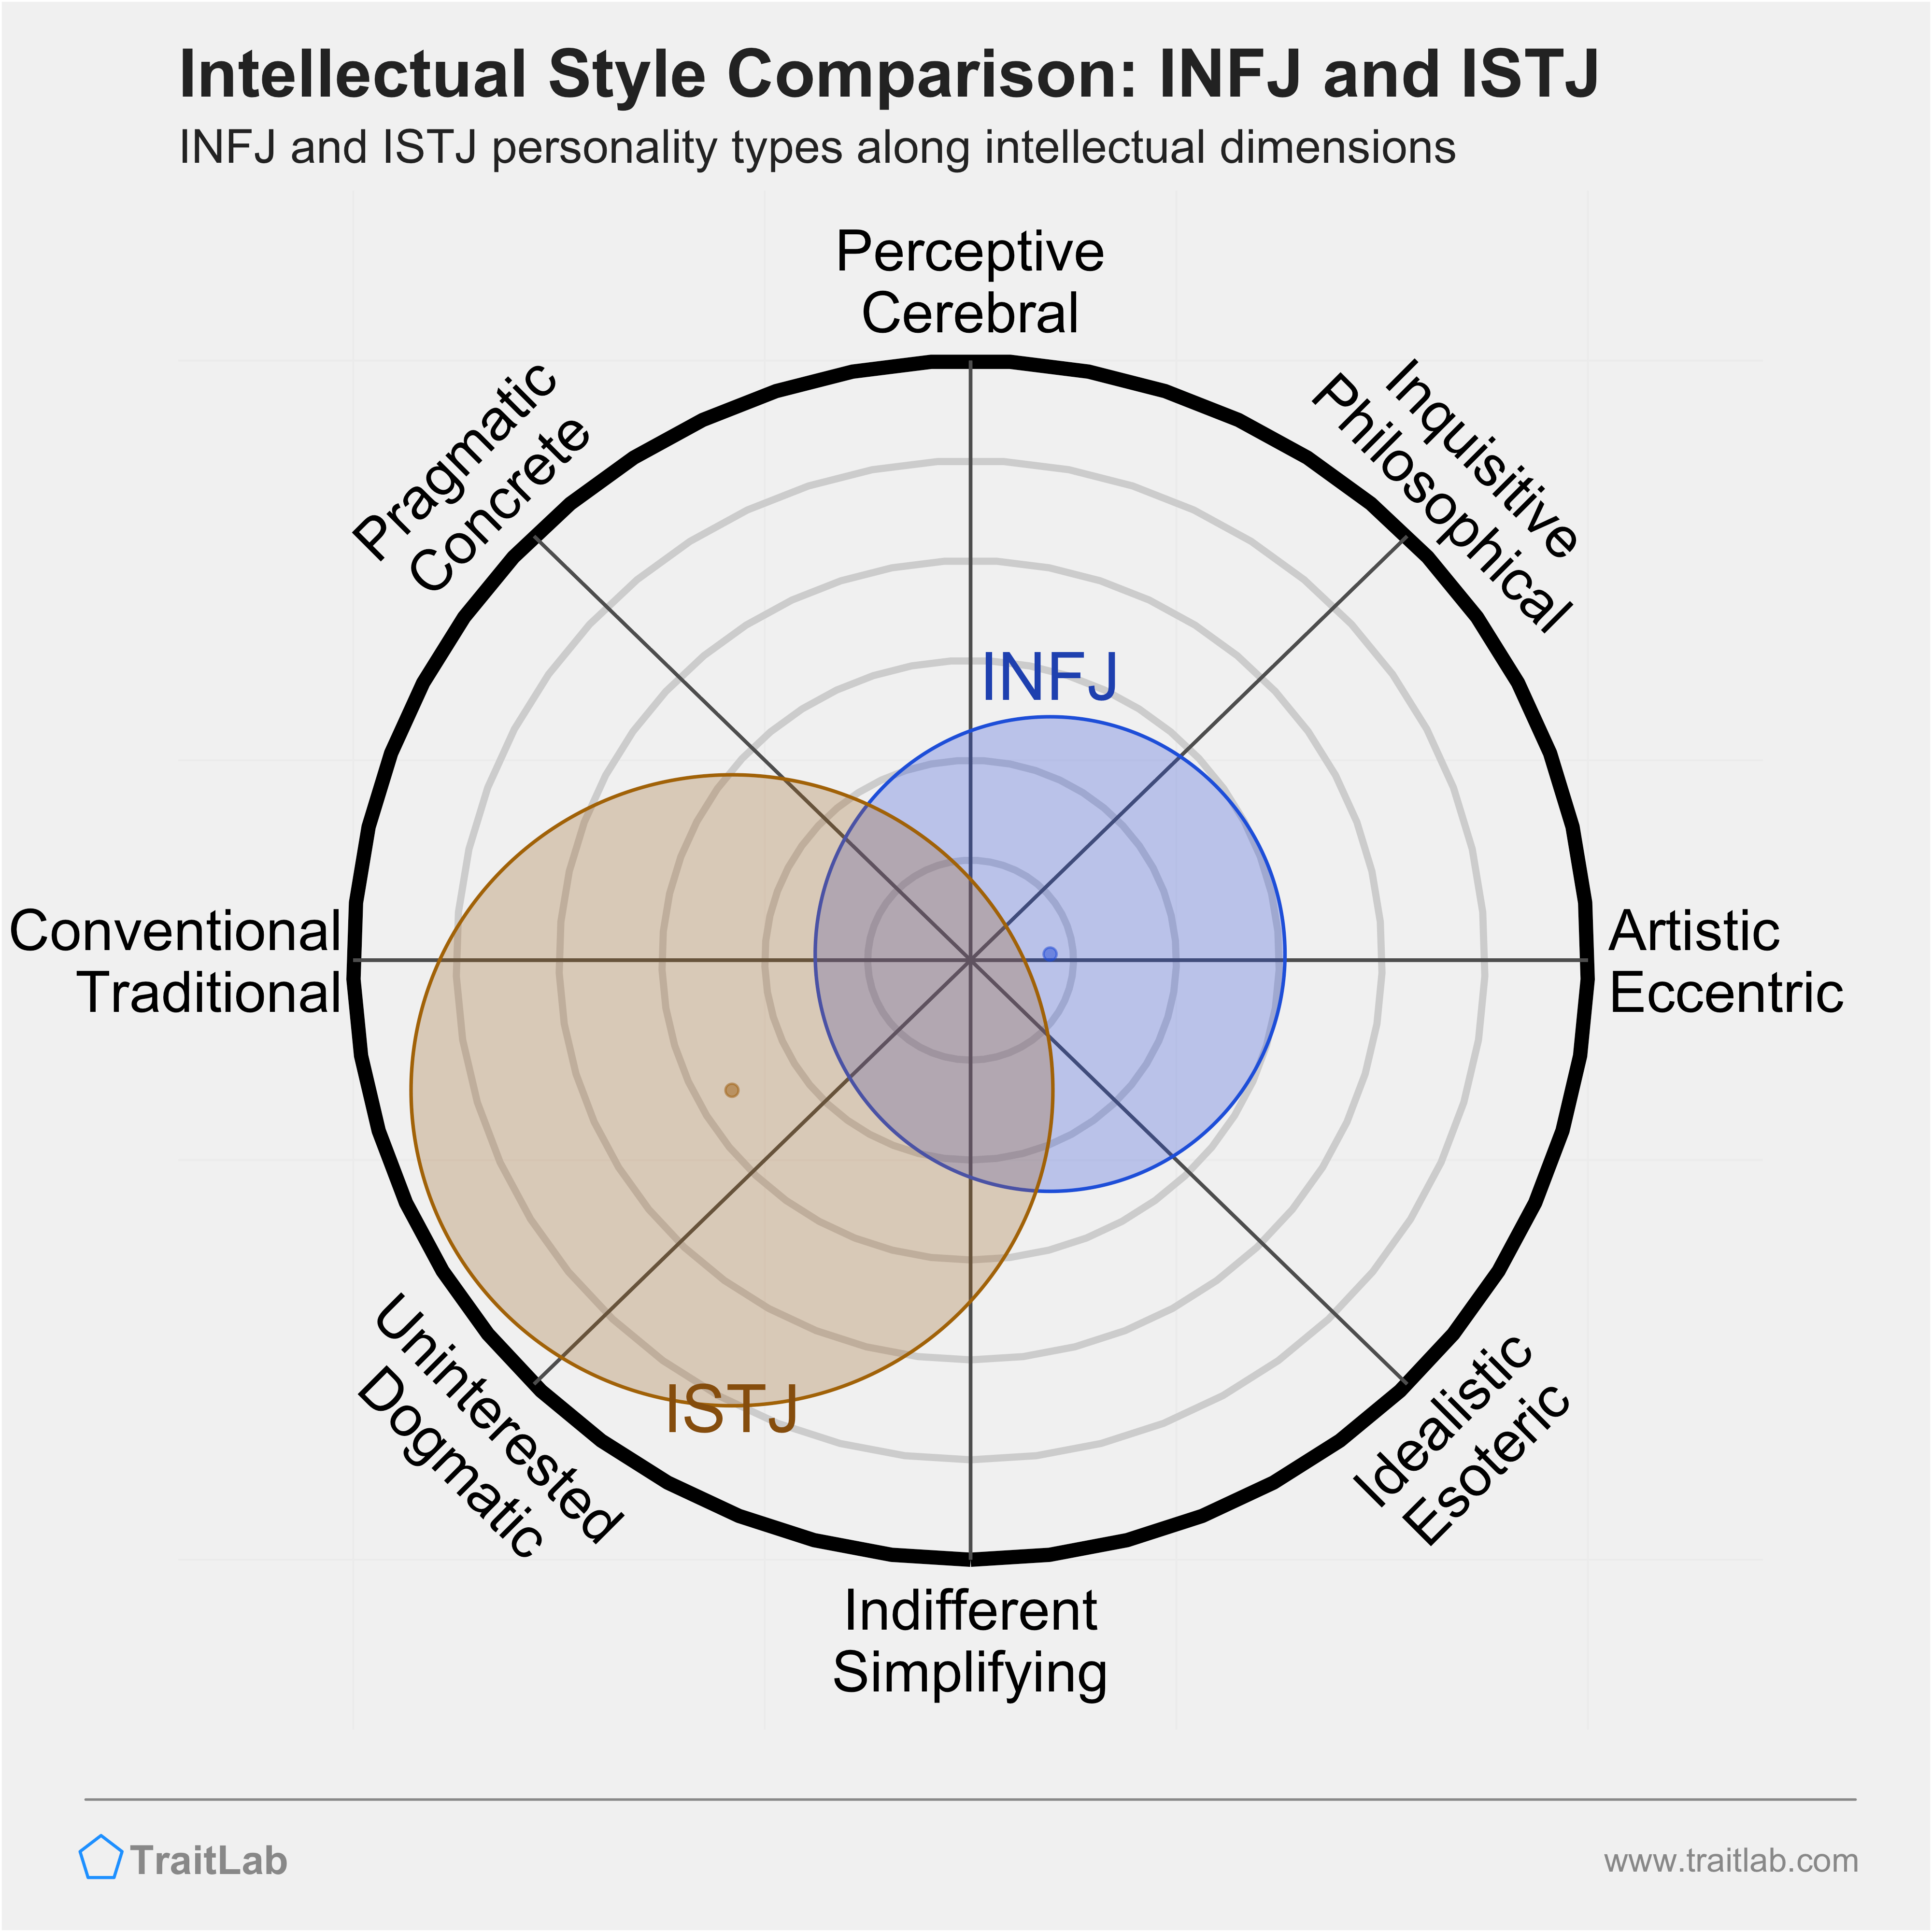 INFJ and ISTJ comparison across intellectual dimensions